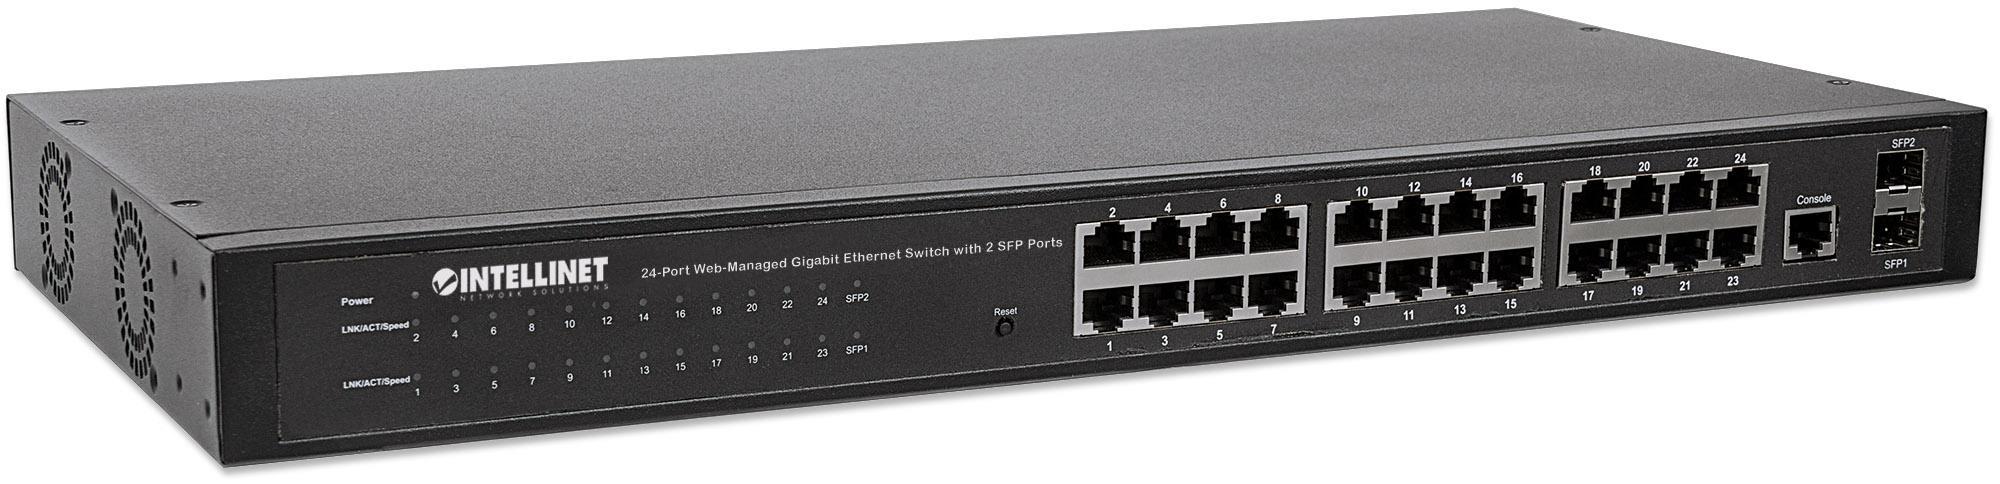 Intellinet Switch 24 porte Web-Managed Gigabit Ethernet con 2 porte SFP